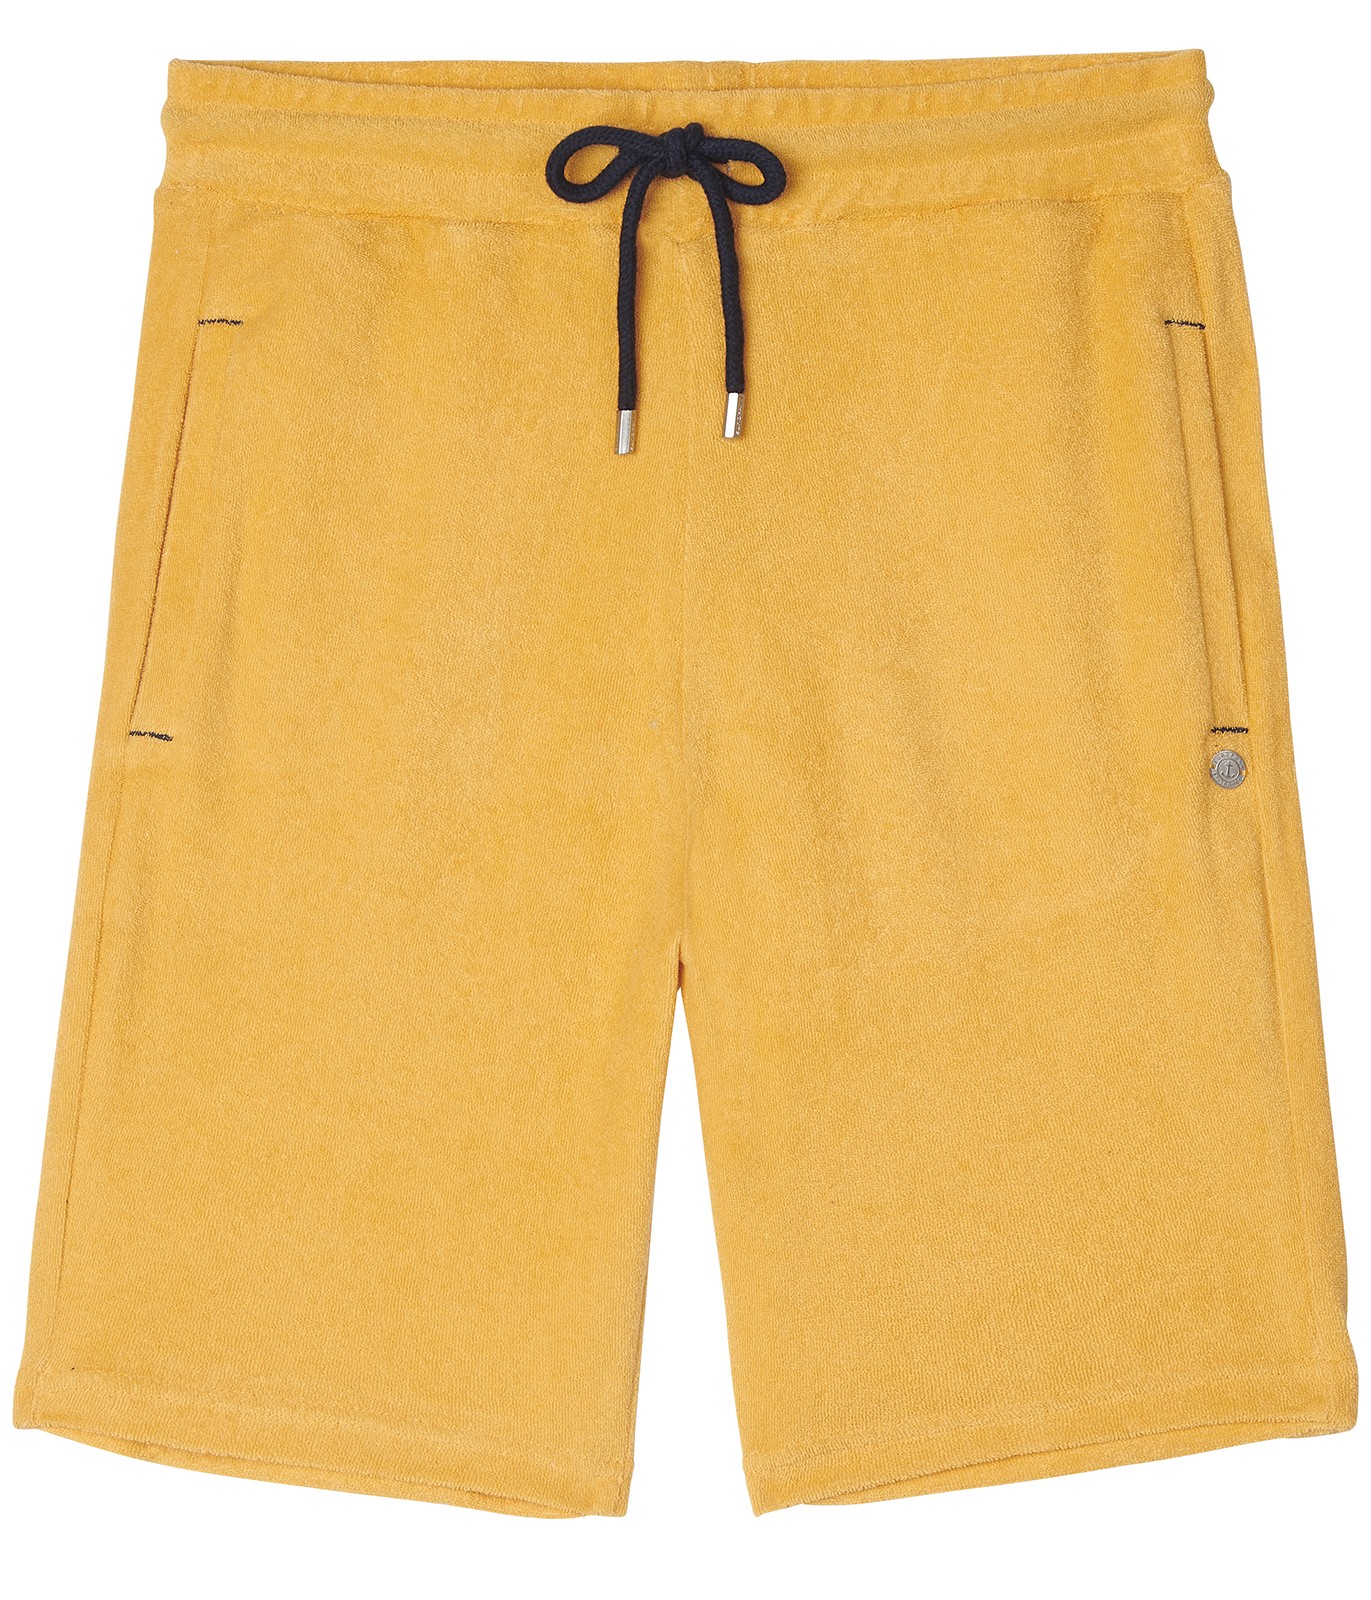 Yellow sponge Jogging short | Quality brand Europann